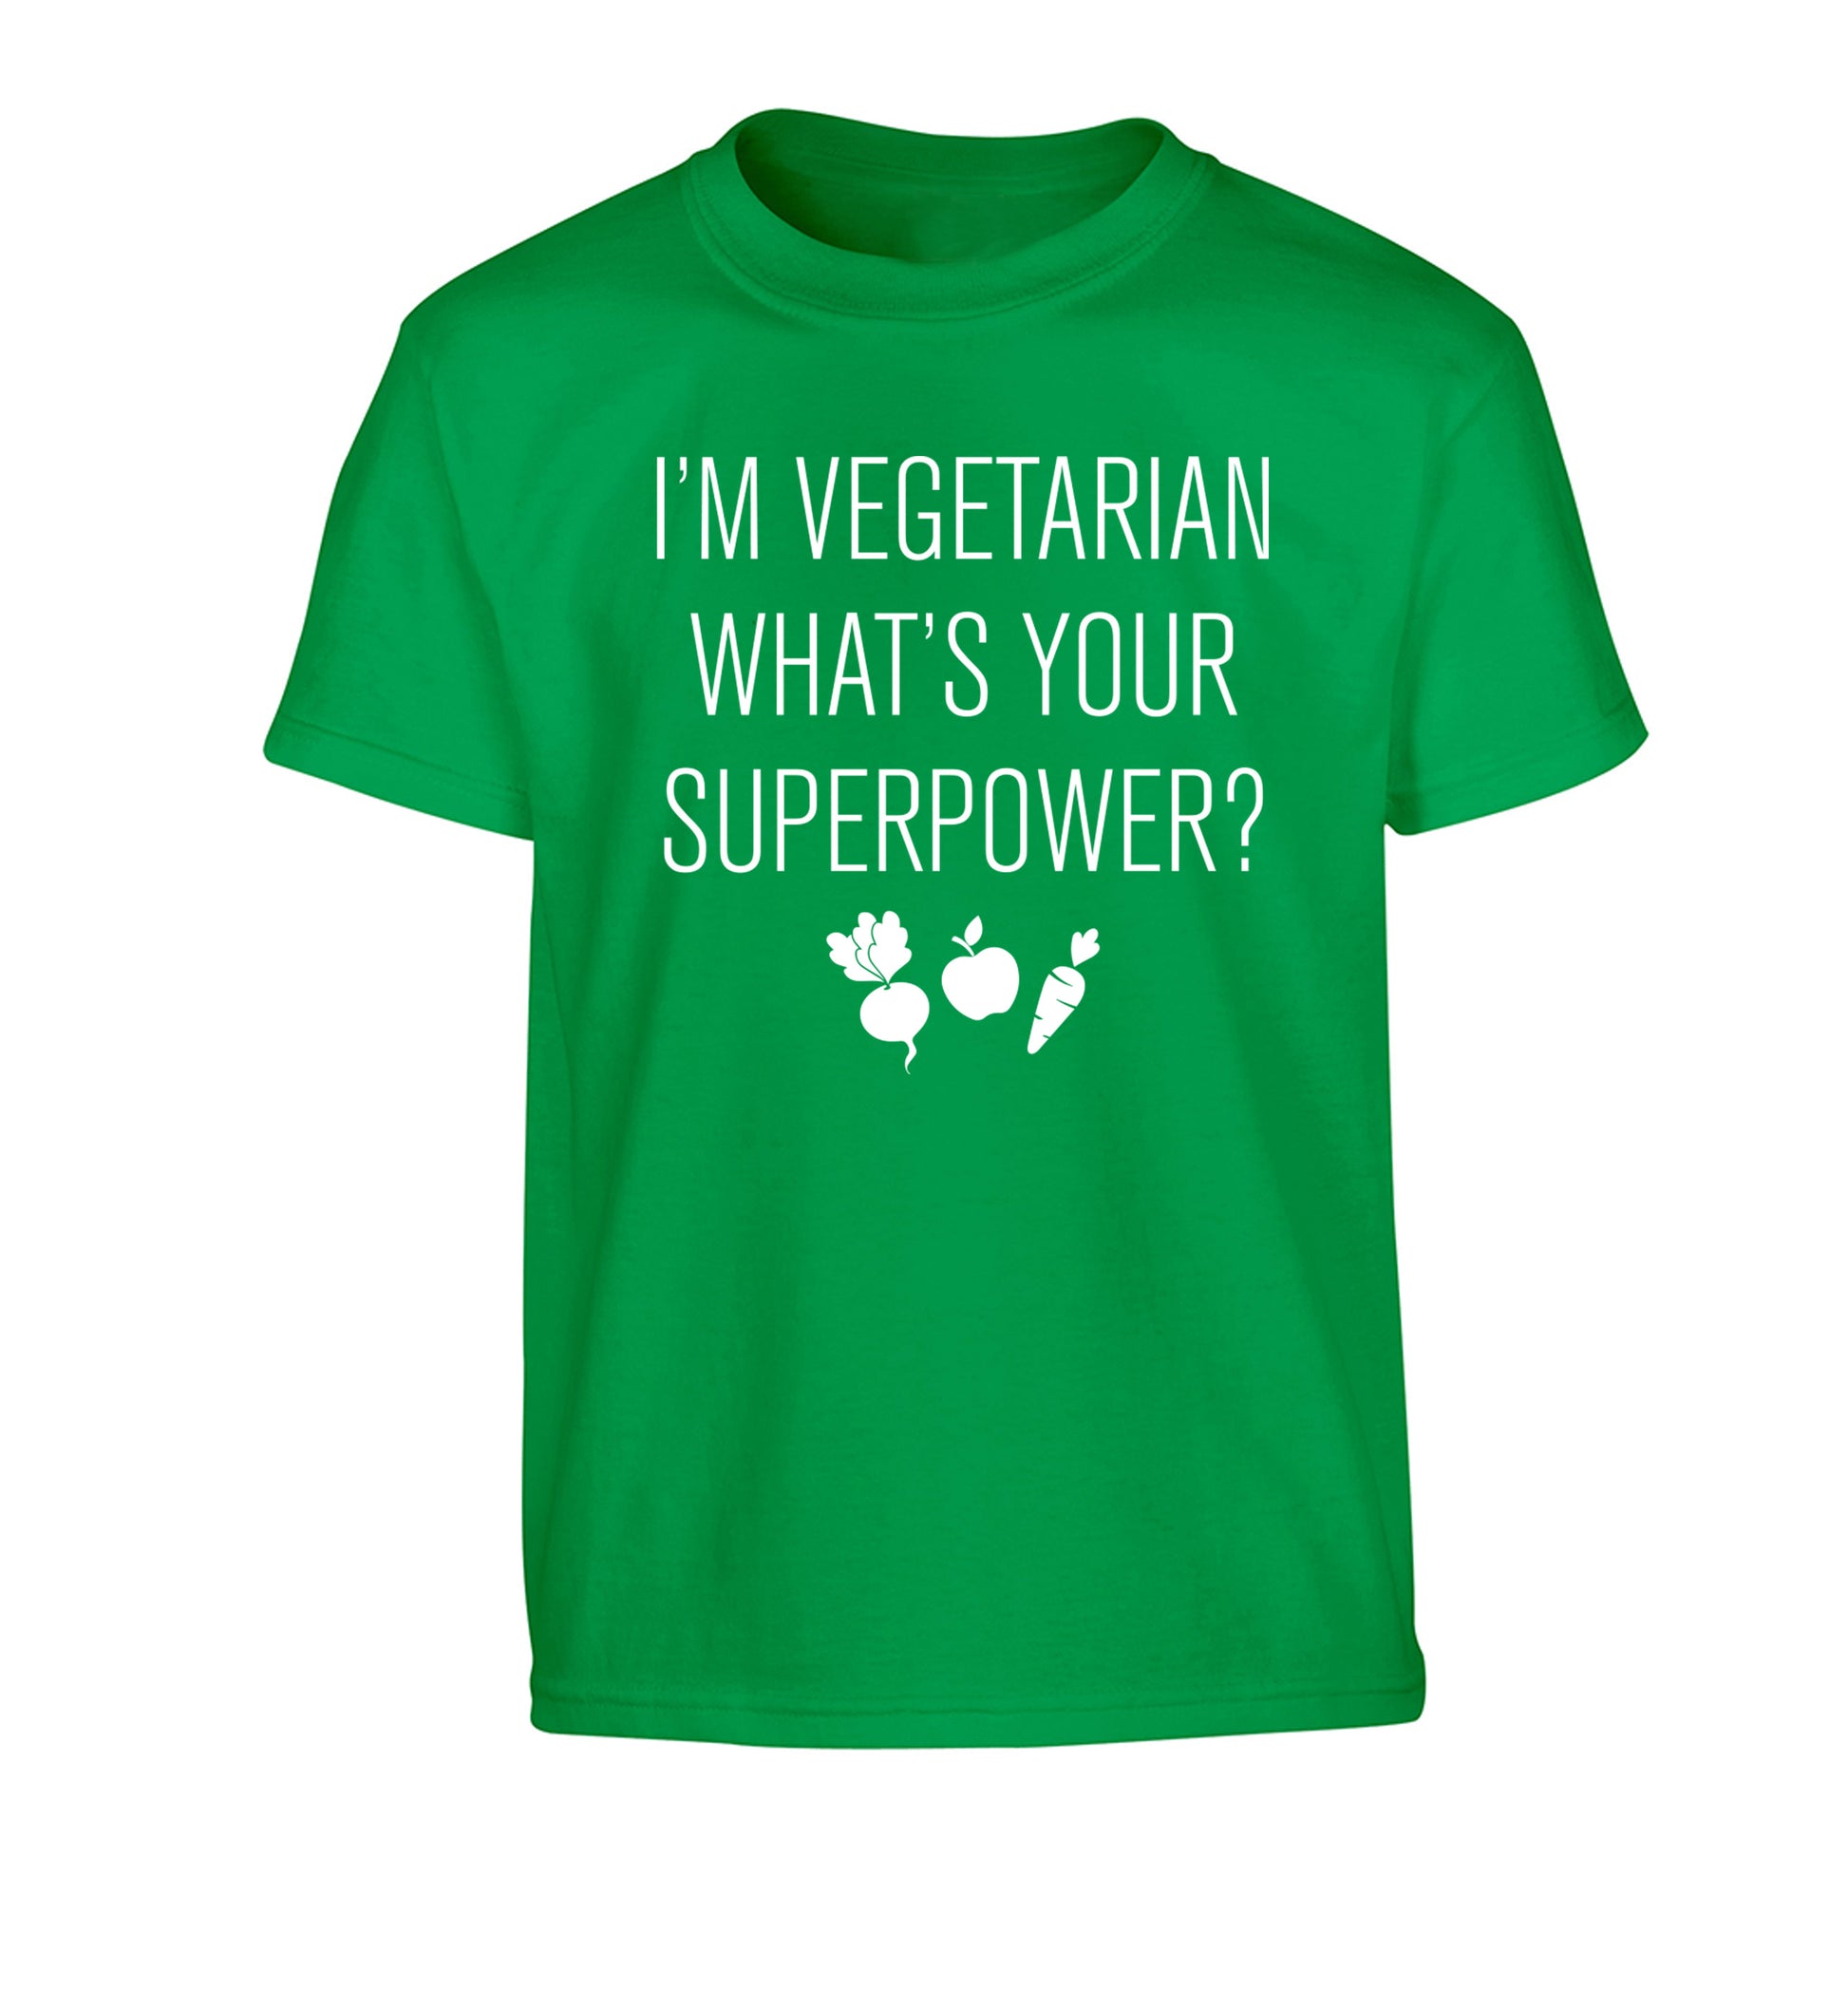 I'm vegetarian what's your superpower? Children's green Tshirt 12-13 Years